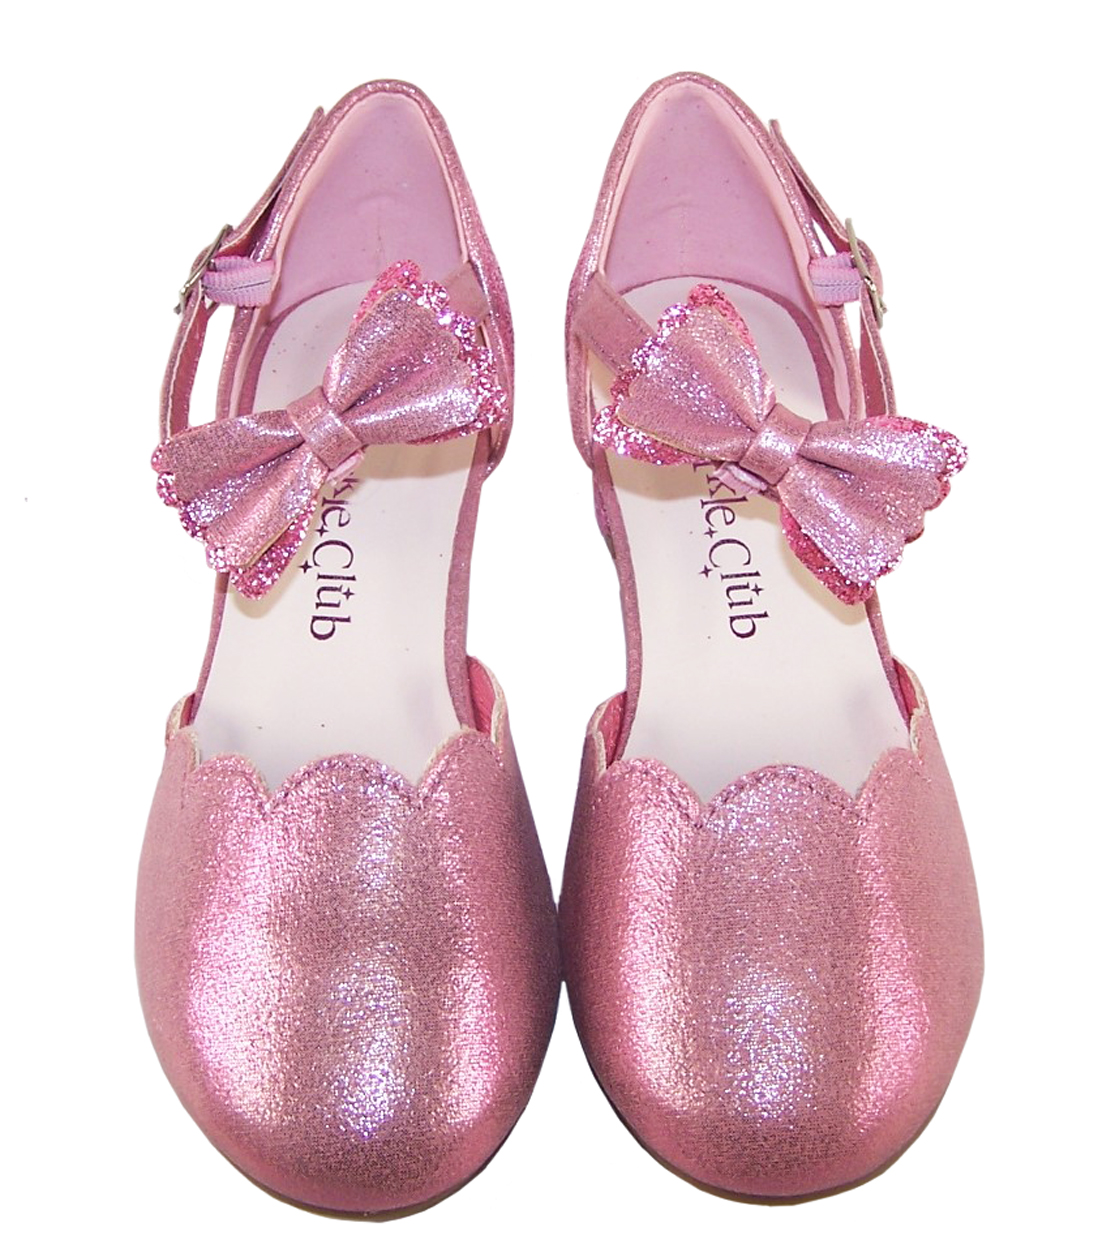 Girls Shiny Shoes Girls Glitter Shoes Girls Glitter Pumps Girls Shiny Shoes Pink/Silver 